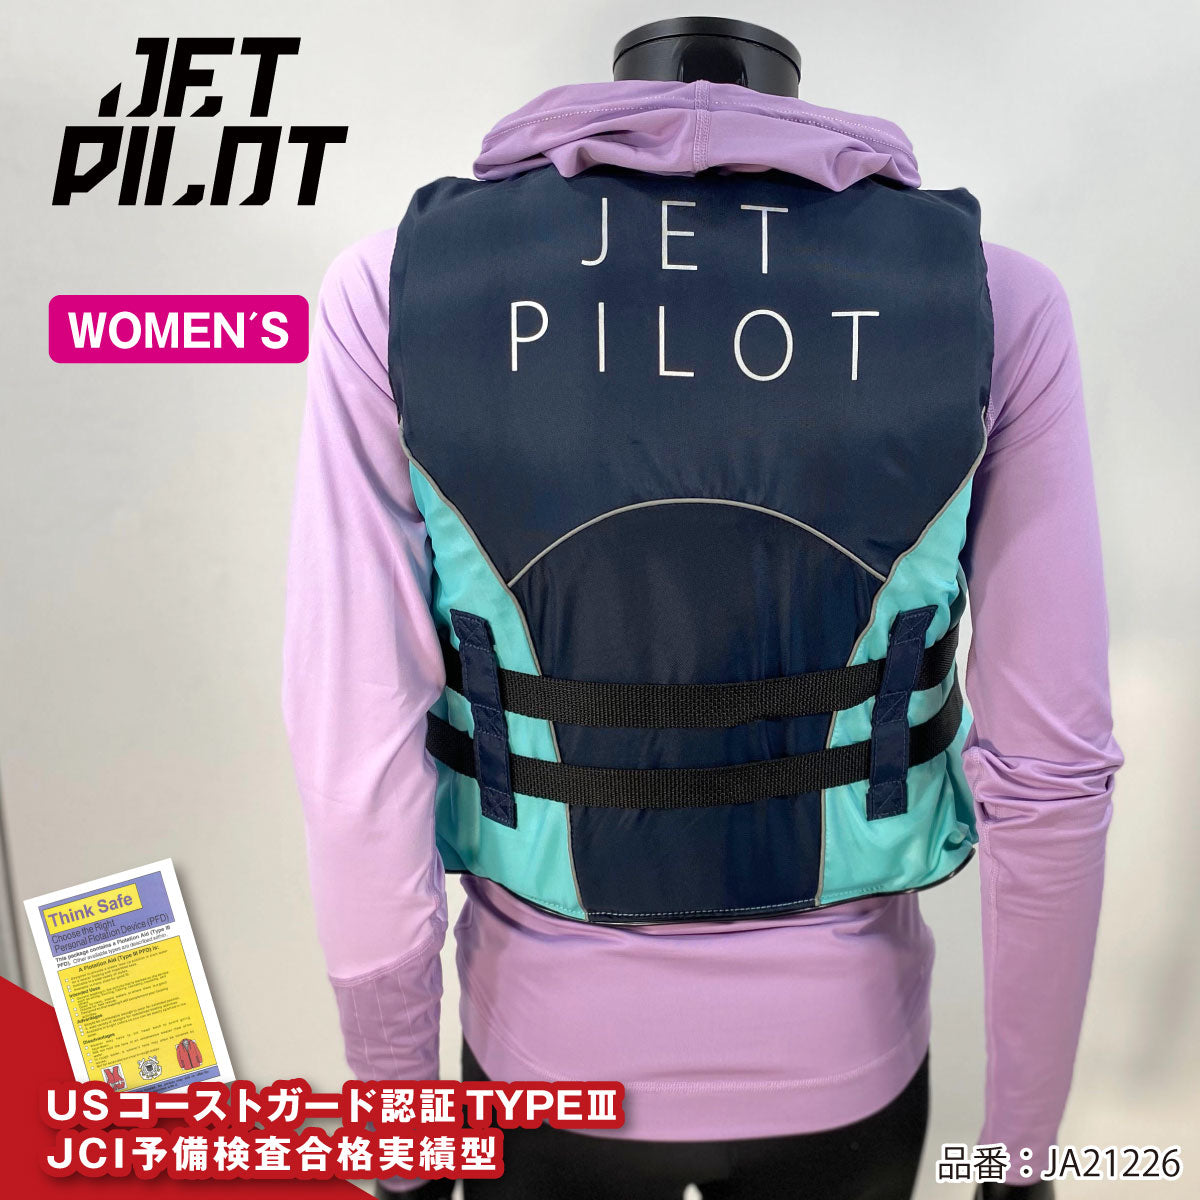 jetpilot ジェットパイロット ライフジャケット ジェットスキー